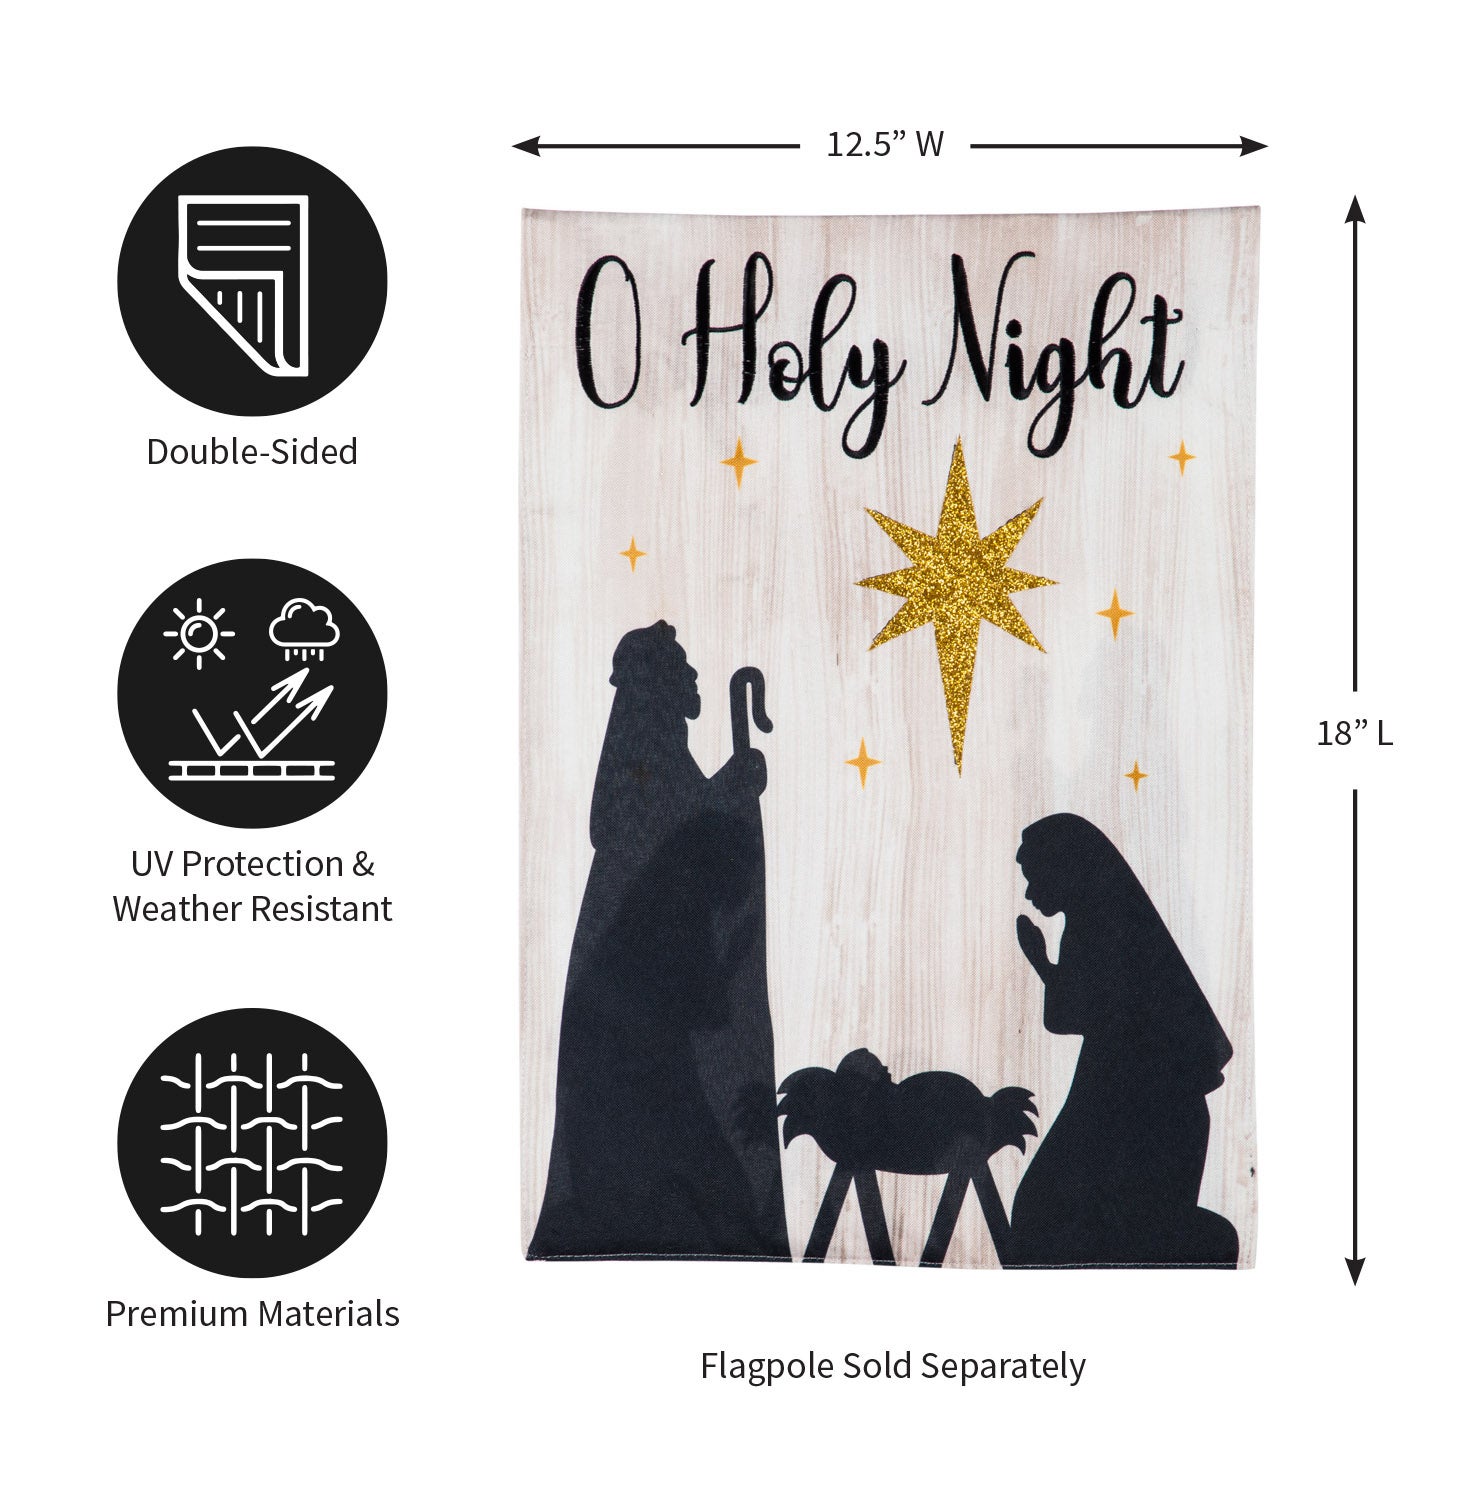 O Holy Night Nativity Silhouette Garden Linen Flag